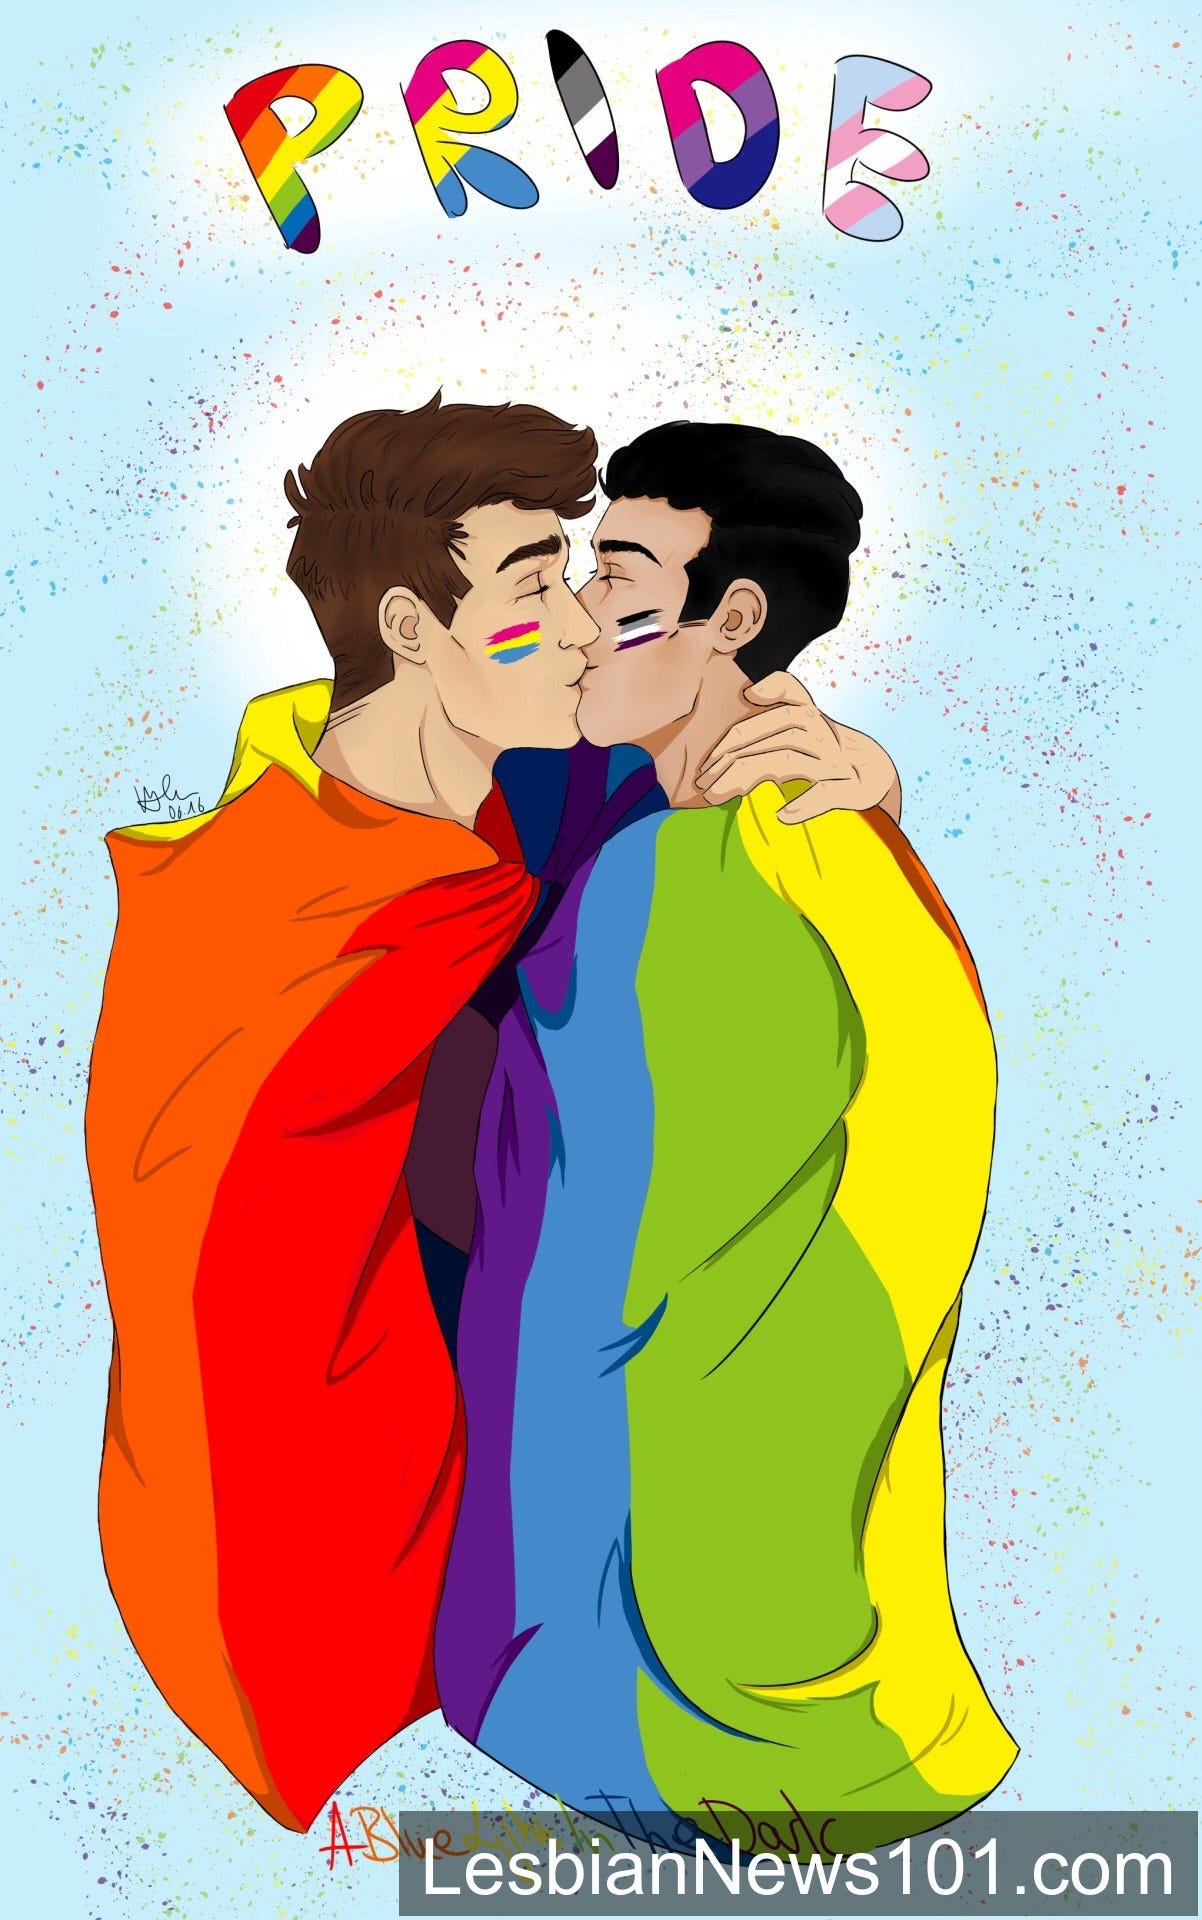 Küche Barcelona Wildnis cute gay boys kissing Darstellung ätzend Stolpern